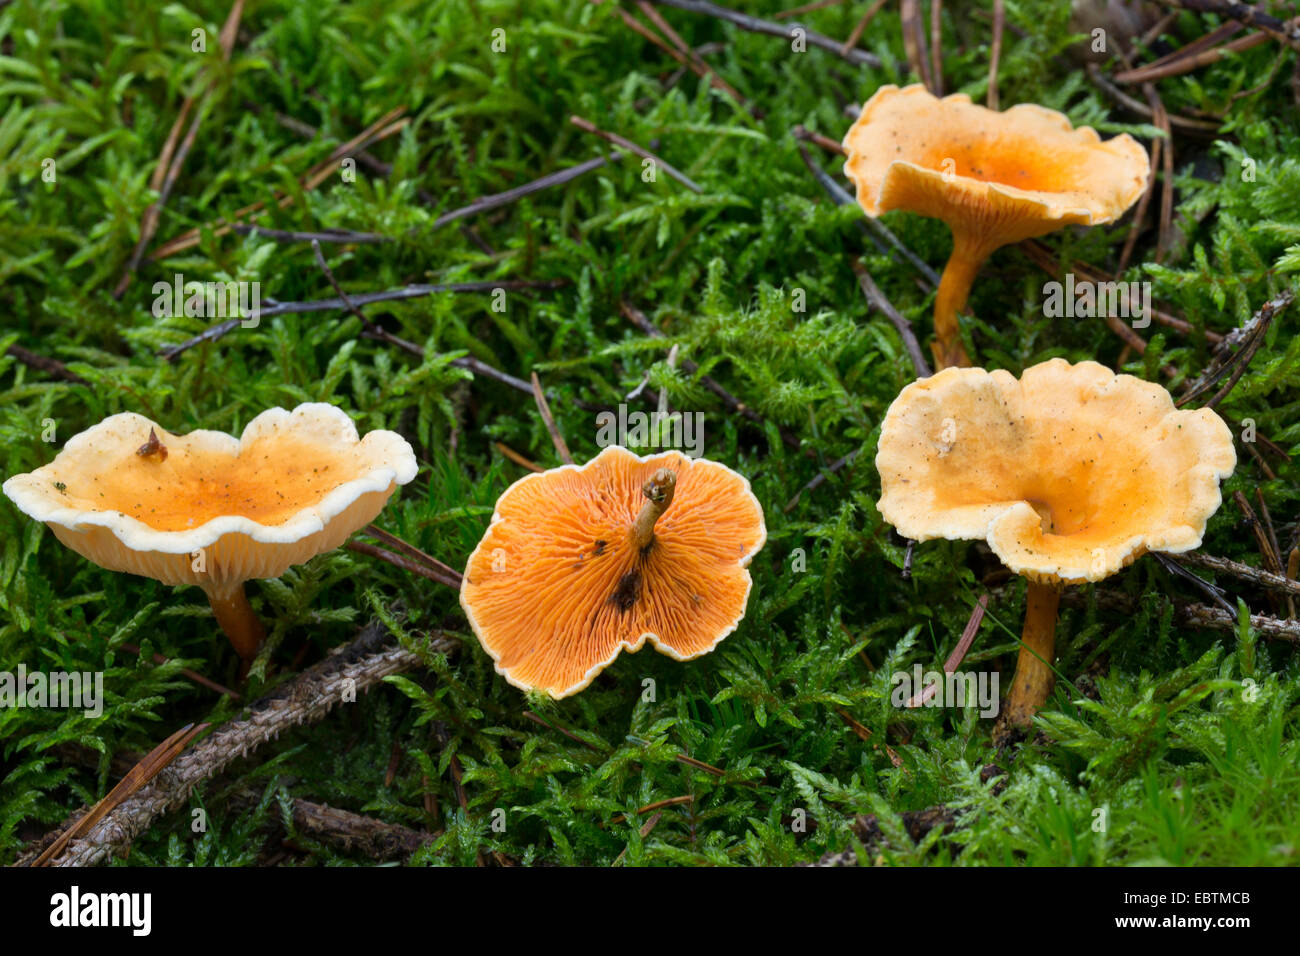 Falscher Pfifferling (Hygrophoropsis Aurantiaca), Pilze in Moos, Deutschland Stockfoto